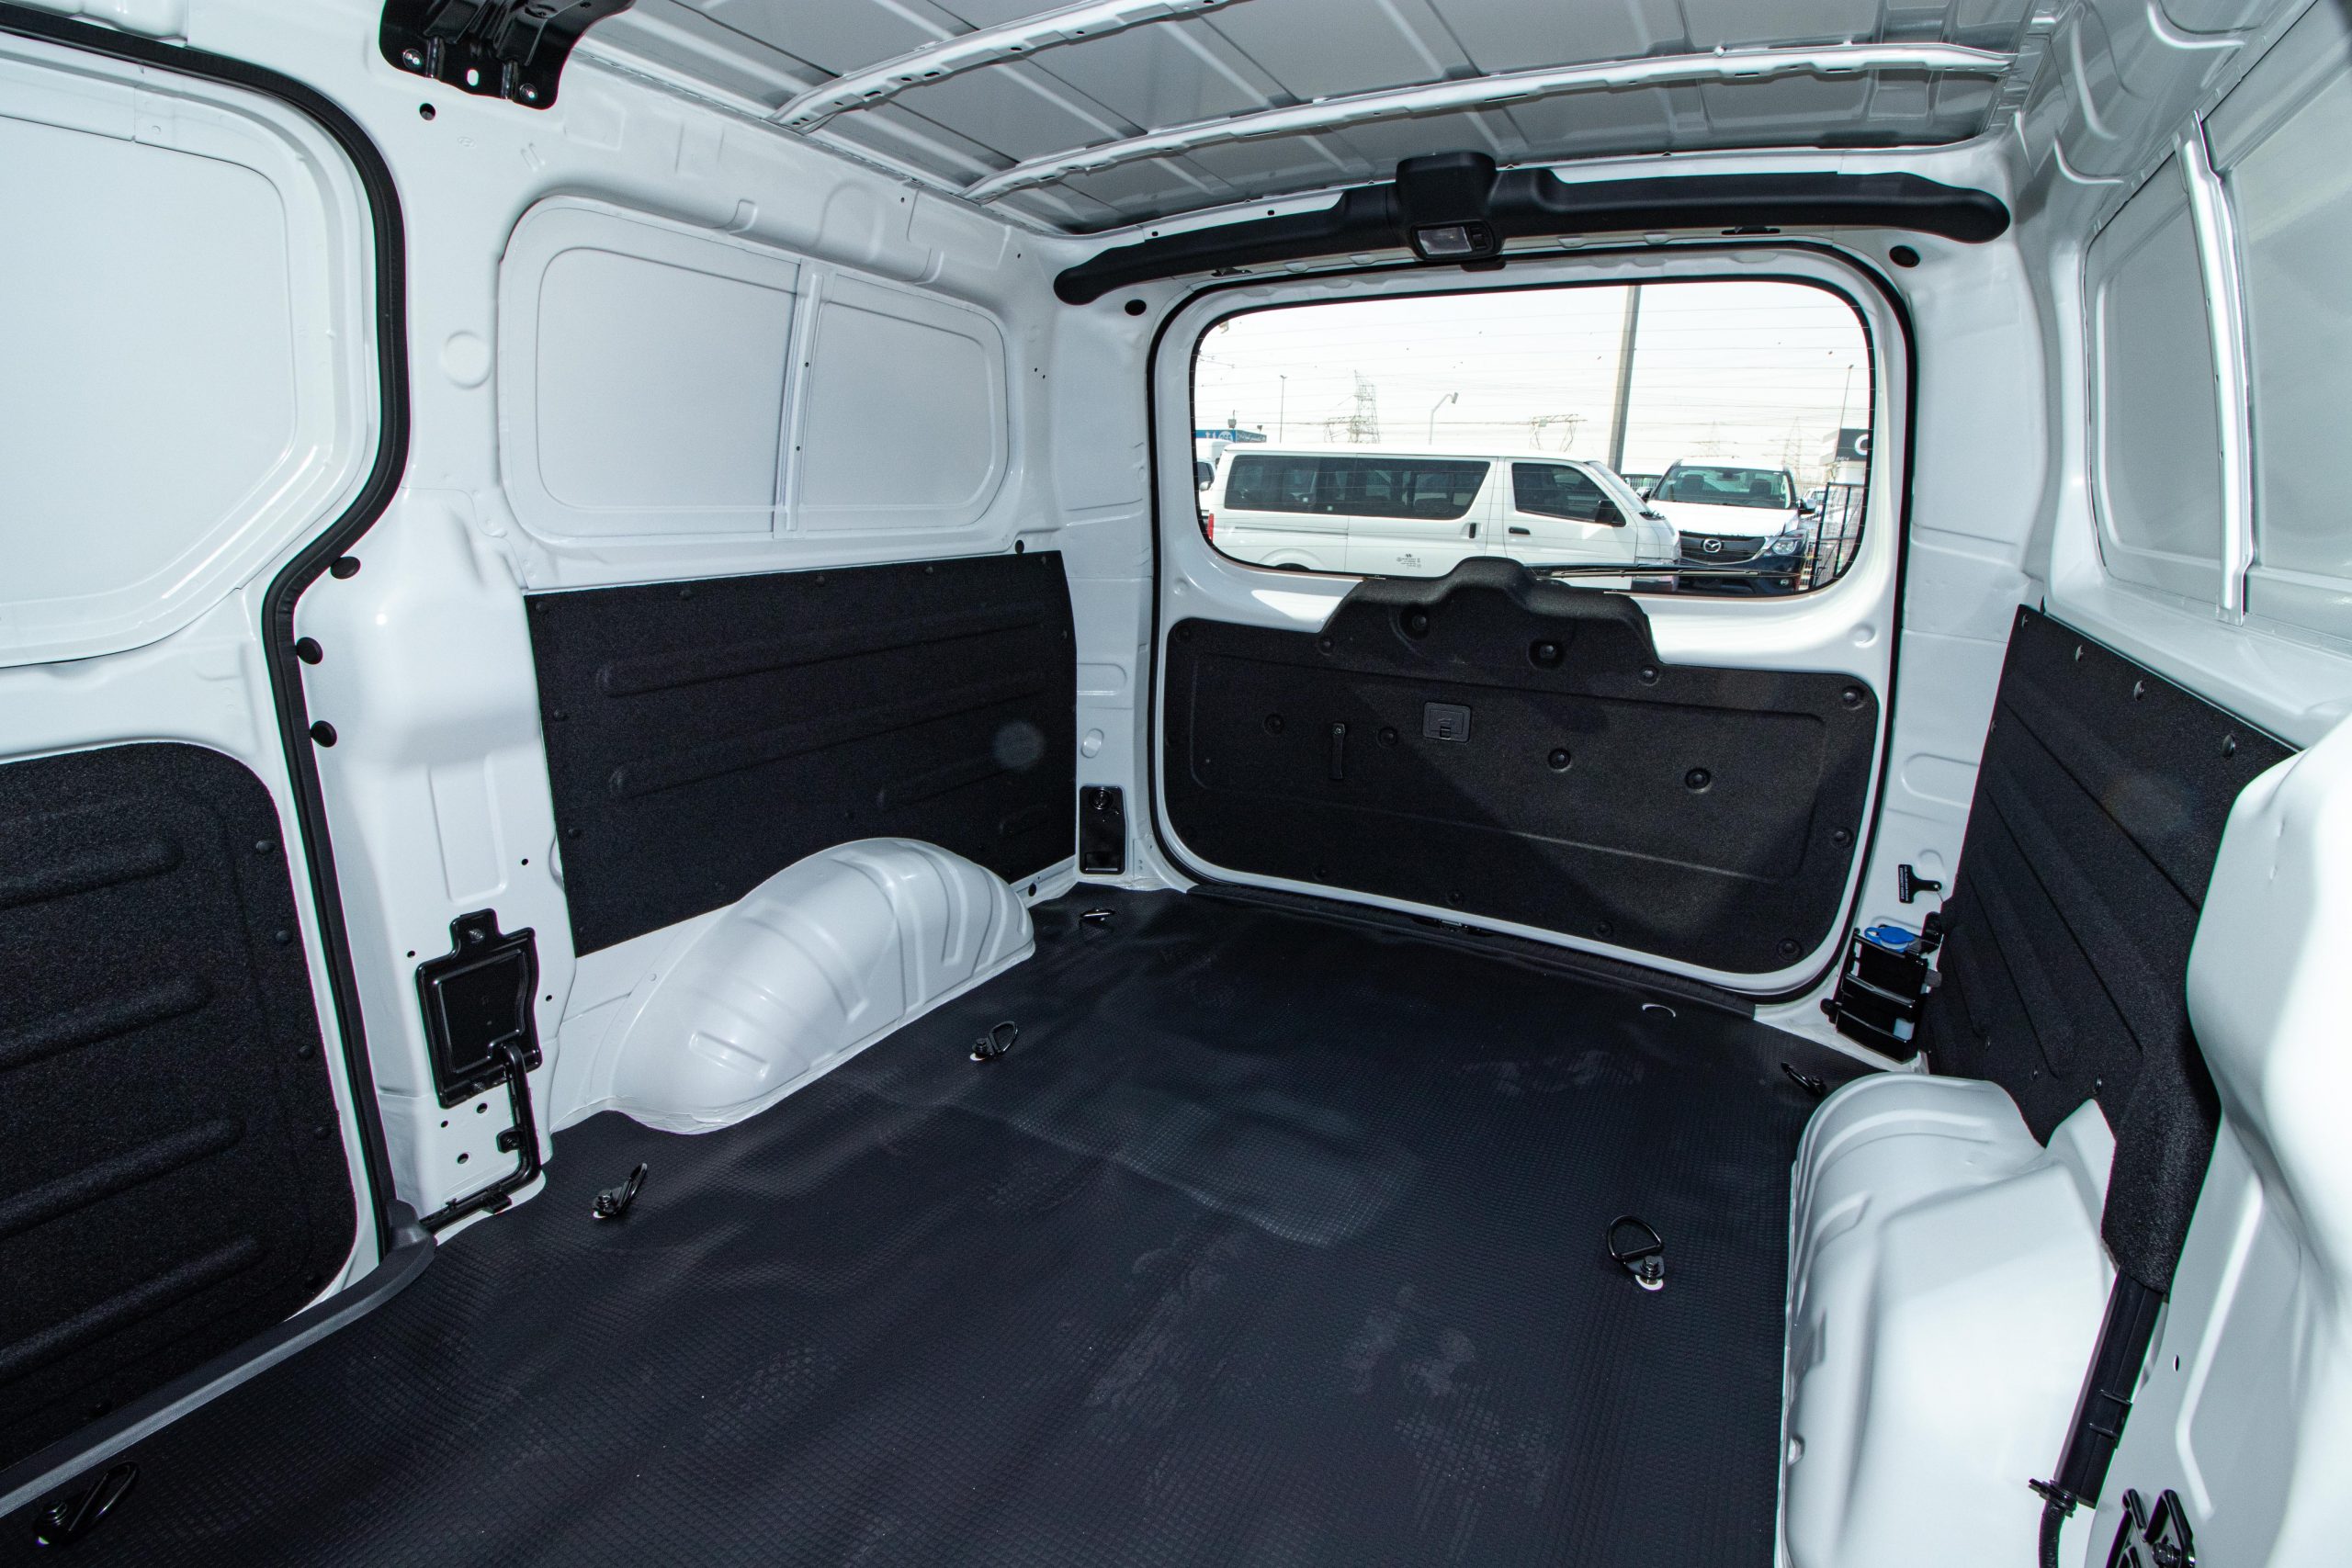 Hyundai H1 Van Features